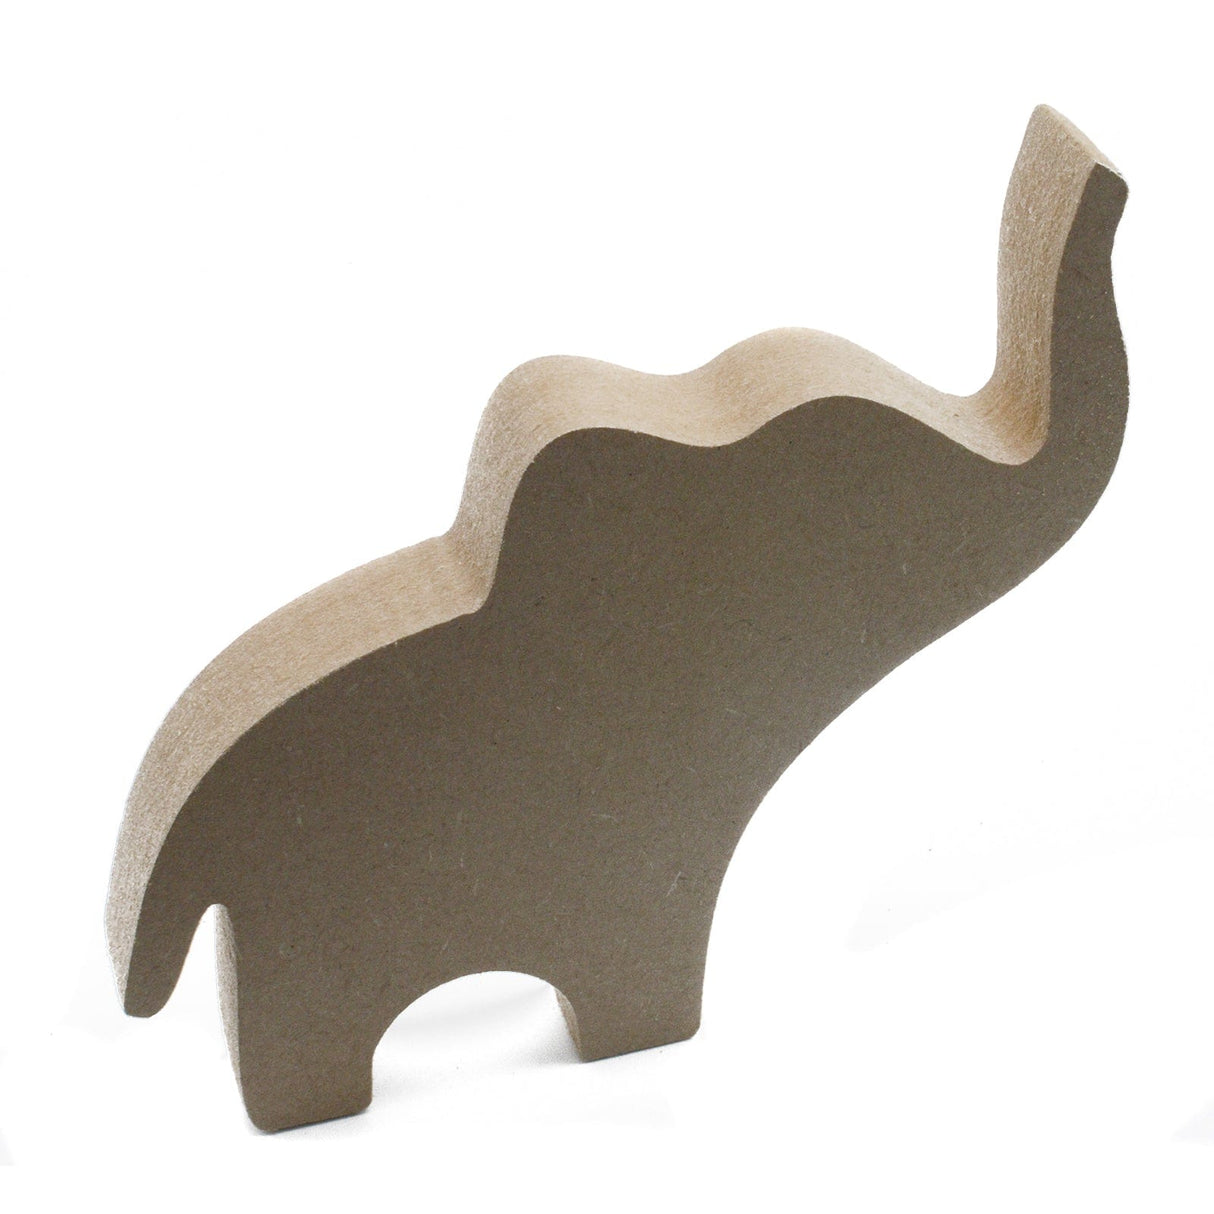 Freestanding Elephant 18mm MDF Wooden Craft Shape - Laserworksuk